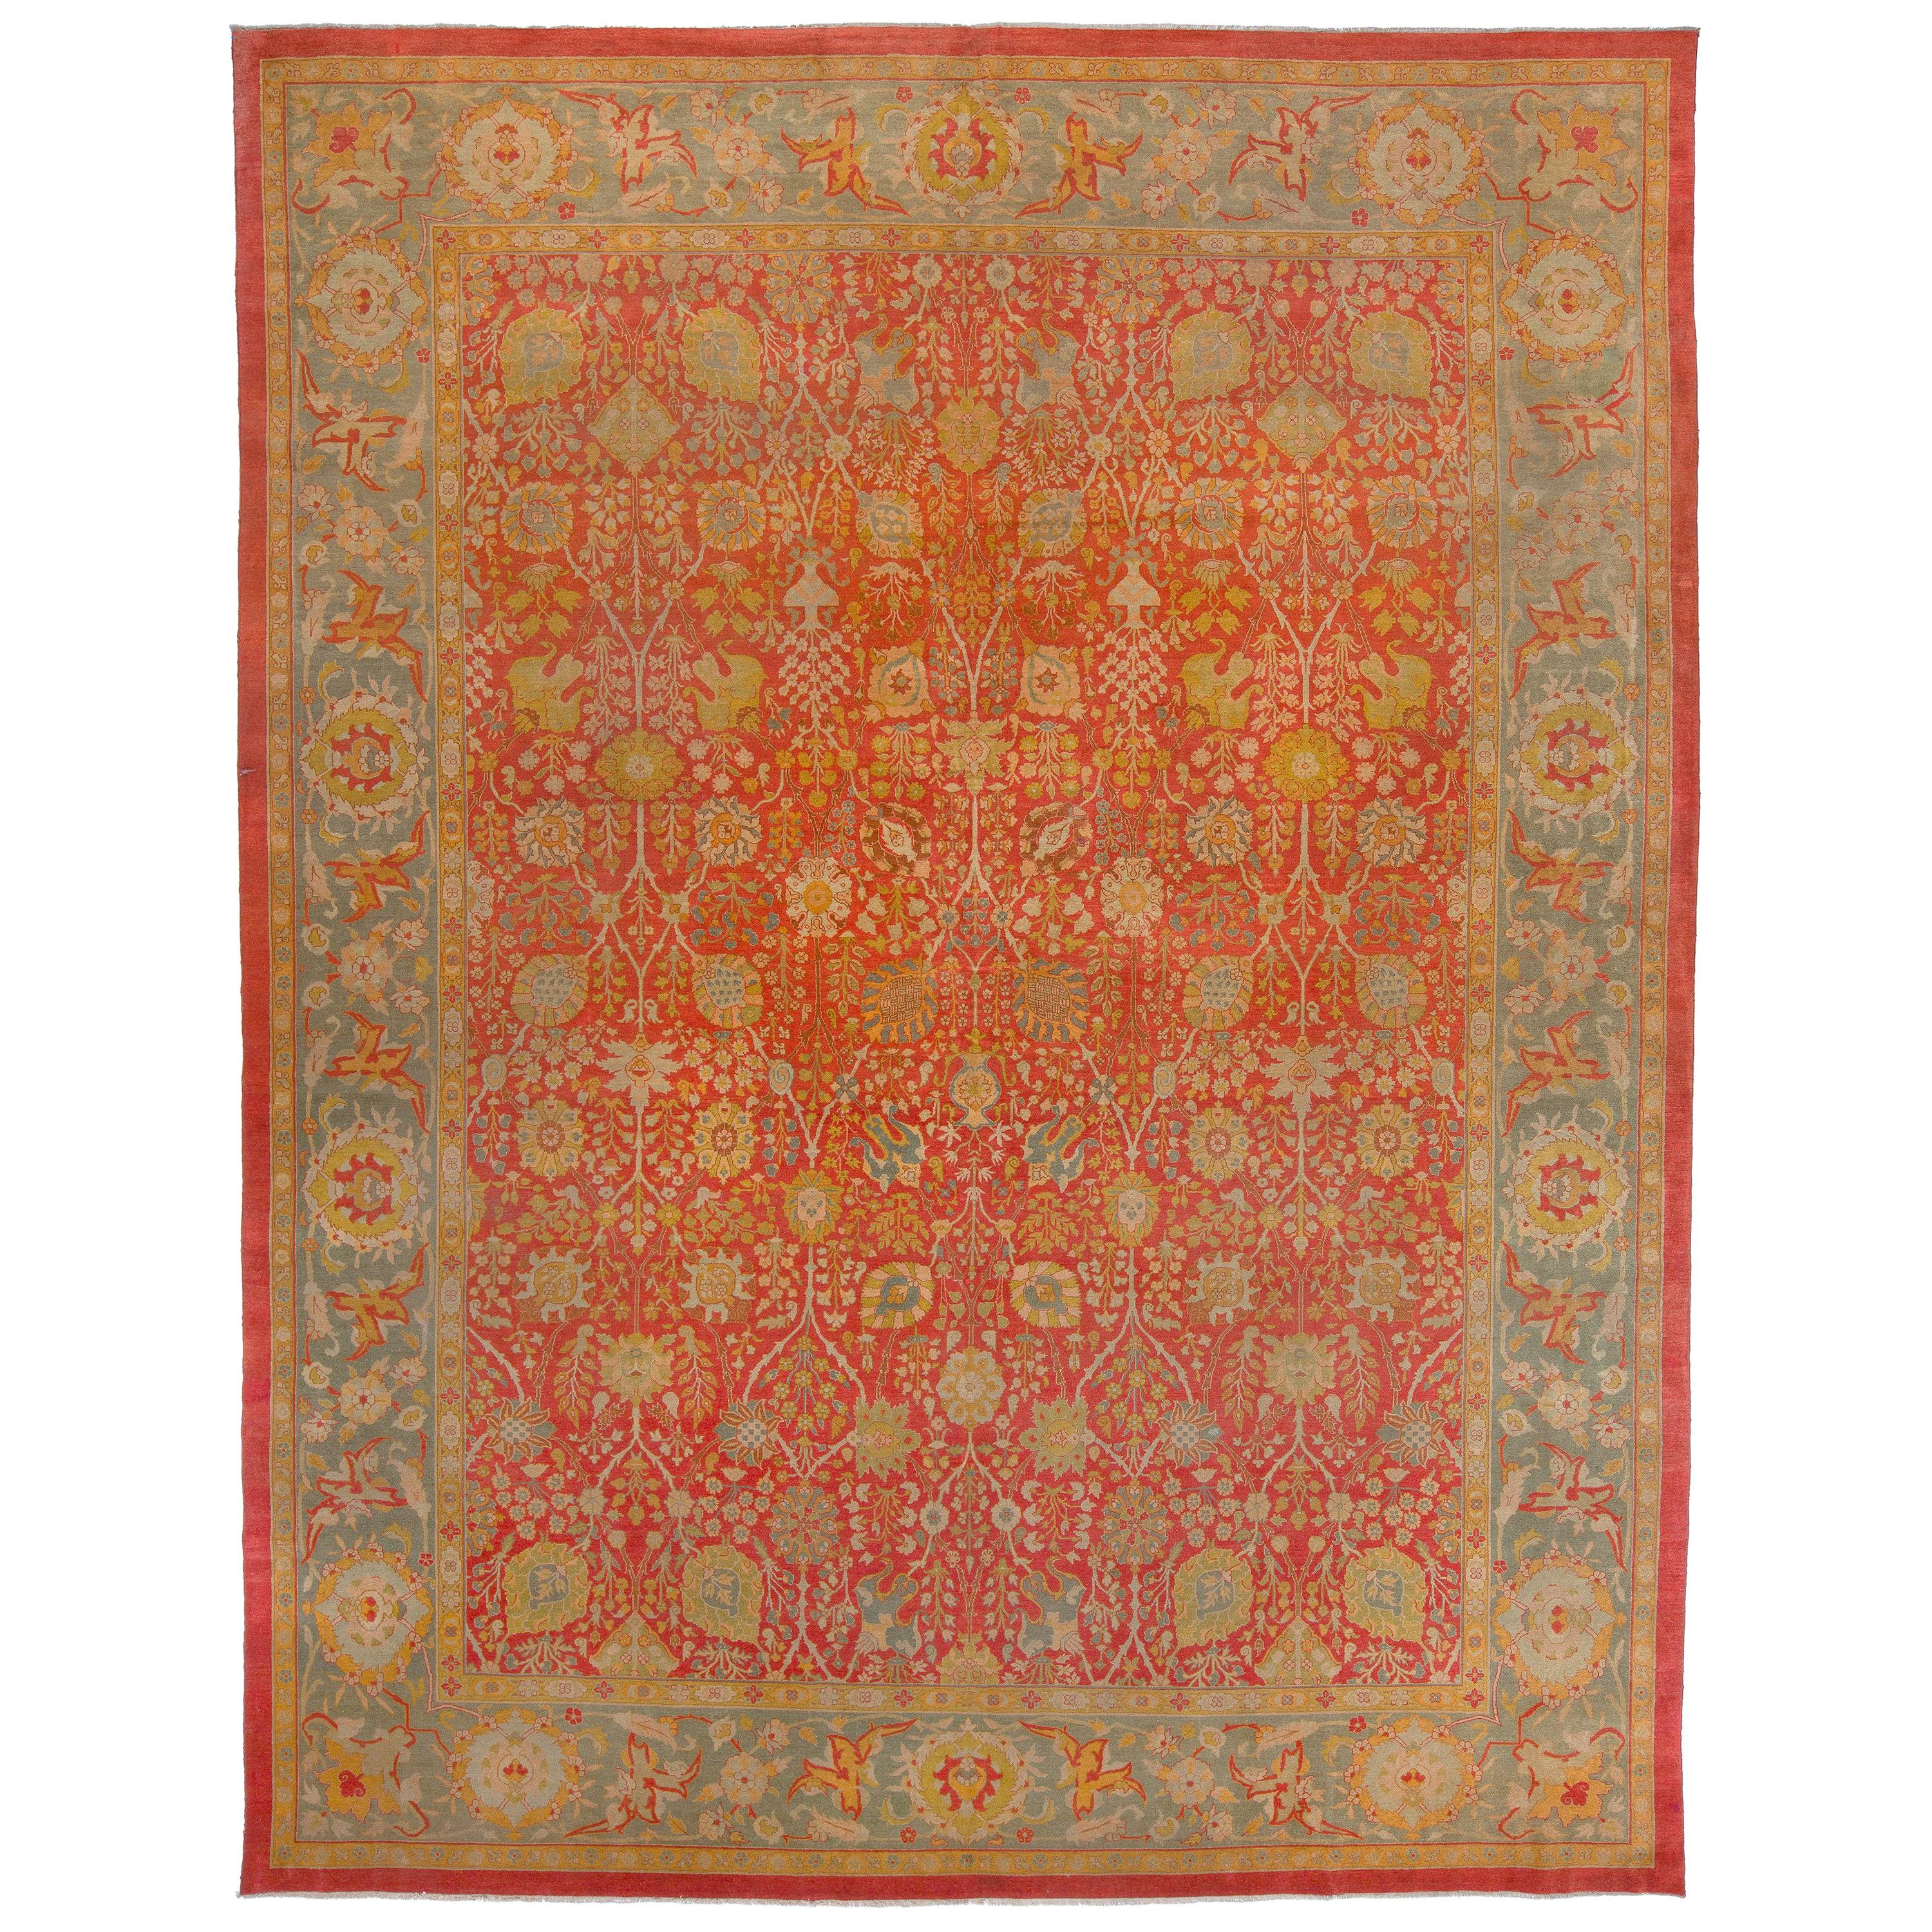 Superbe tapis indien ancien Agra en vente